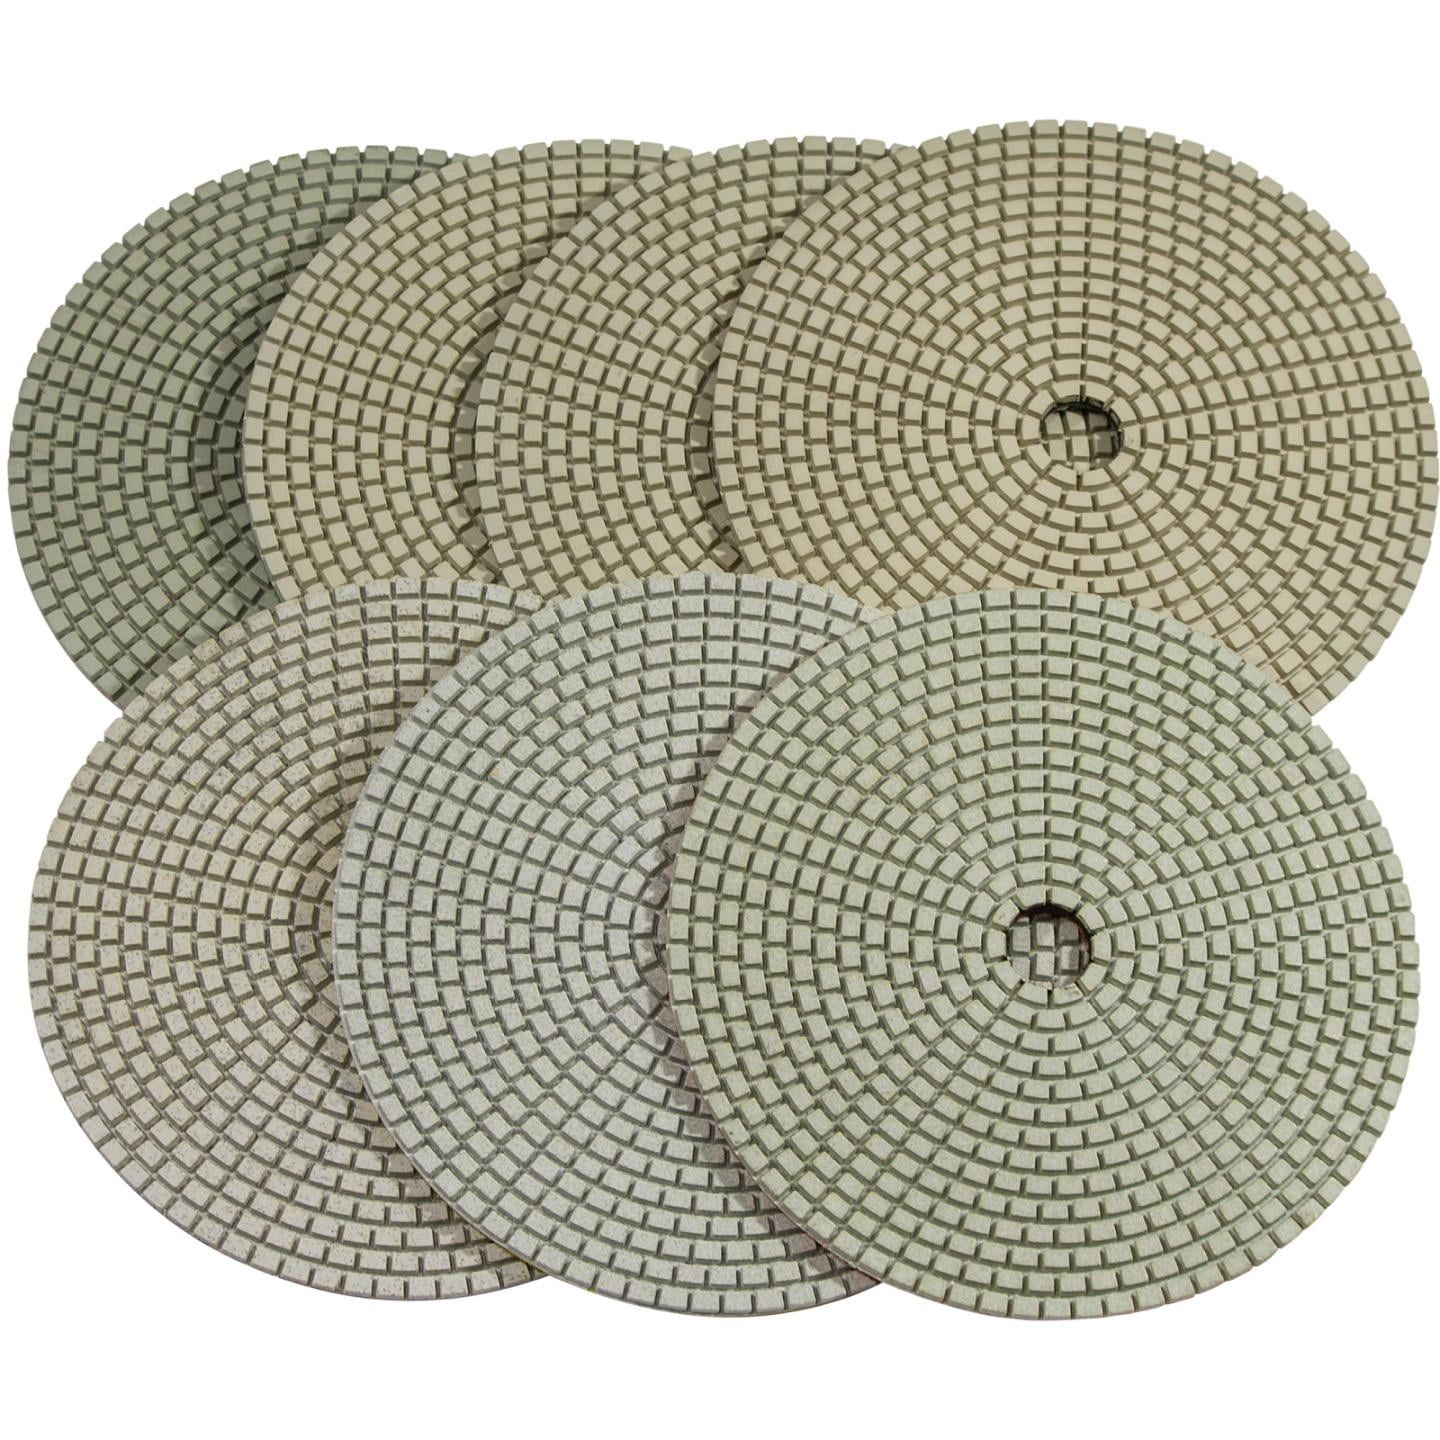 Stadea PPD126N 7 Dry Diamond Polishing Pads for Concrete Travertine Marble Terrazzo Floor Edges Countertop Polishing Grit 800 Series Super C